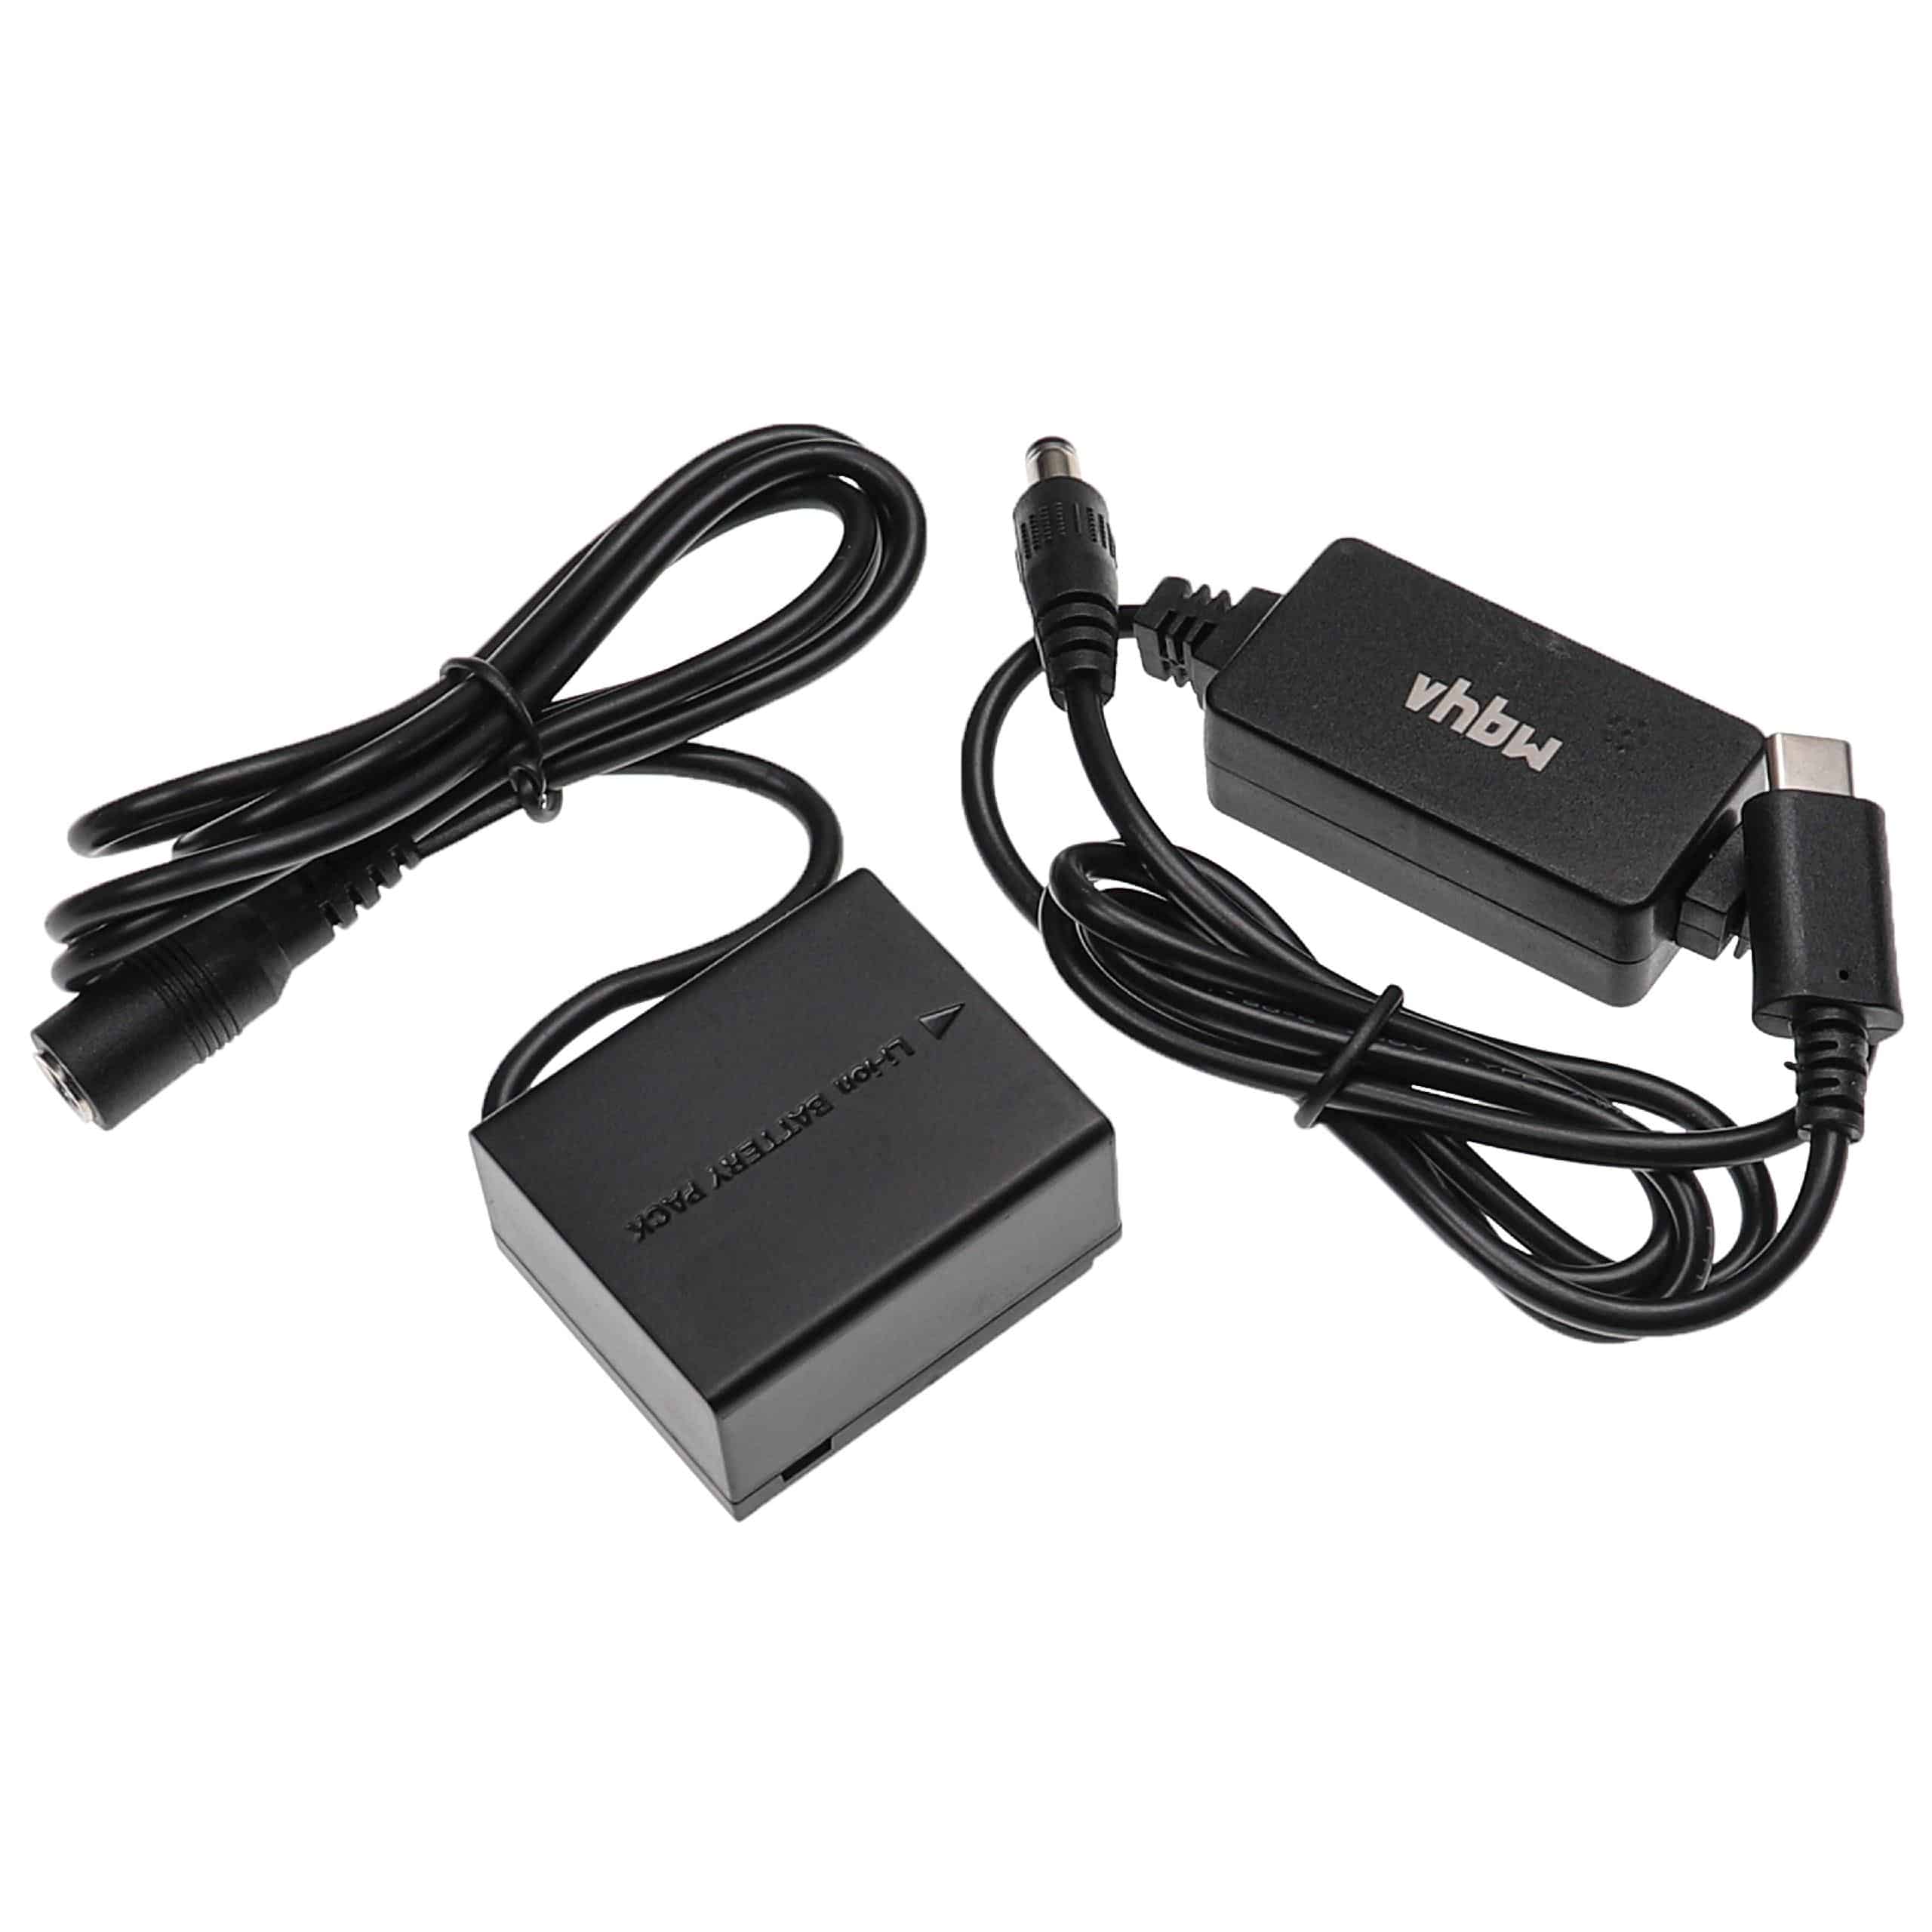 USB Power Supply replaces DMW-AC8 for Camera + DC Coupler as Panasonic DMW-DCC3 - 2 m, 8.4 V 3.0 A